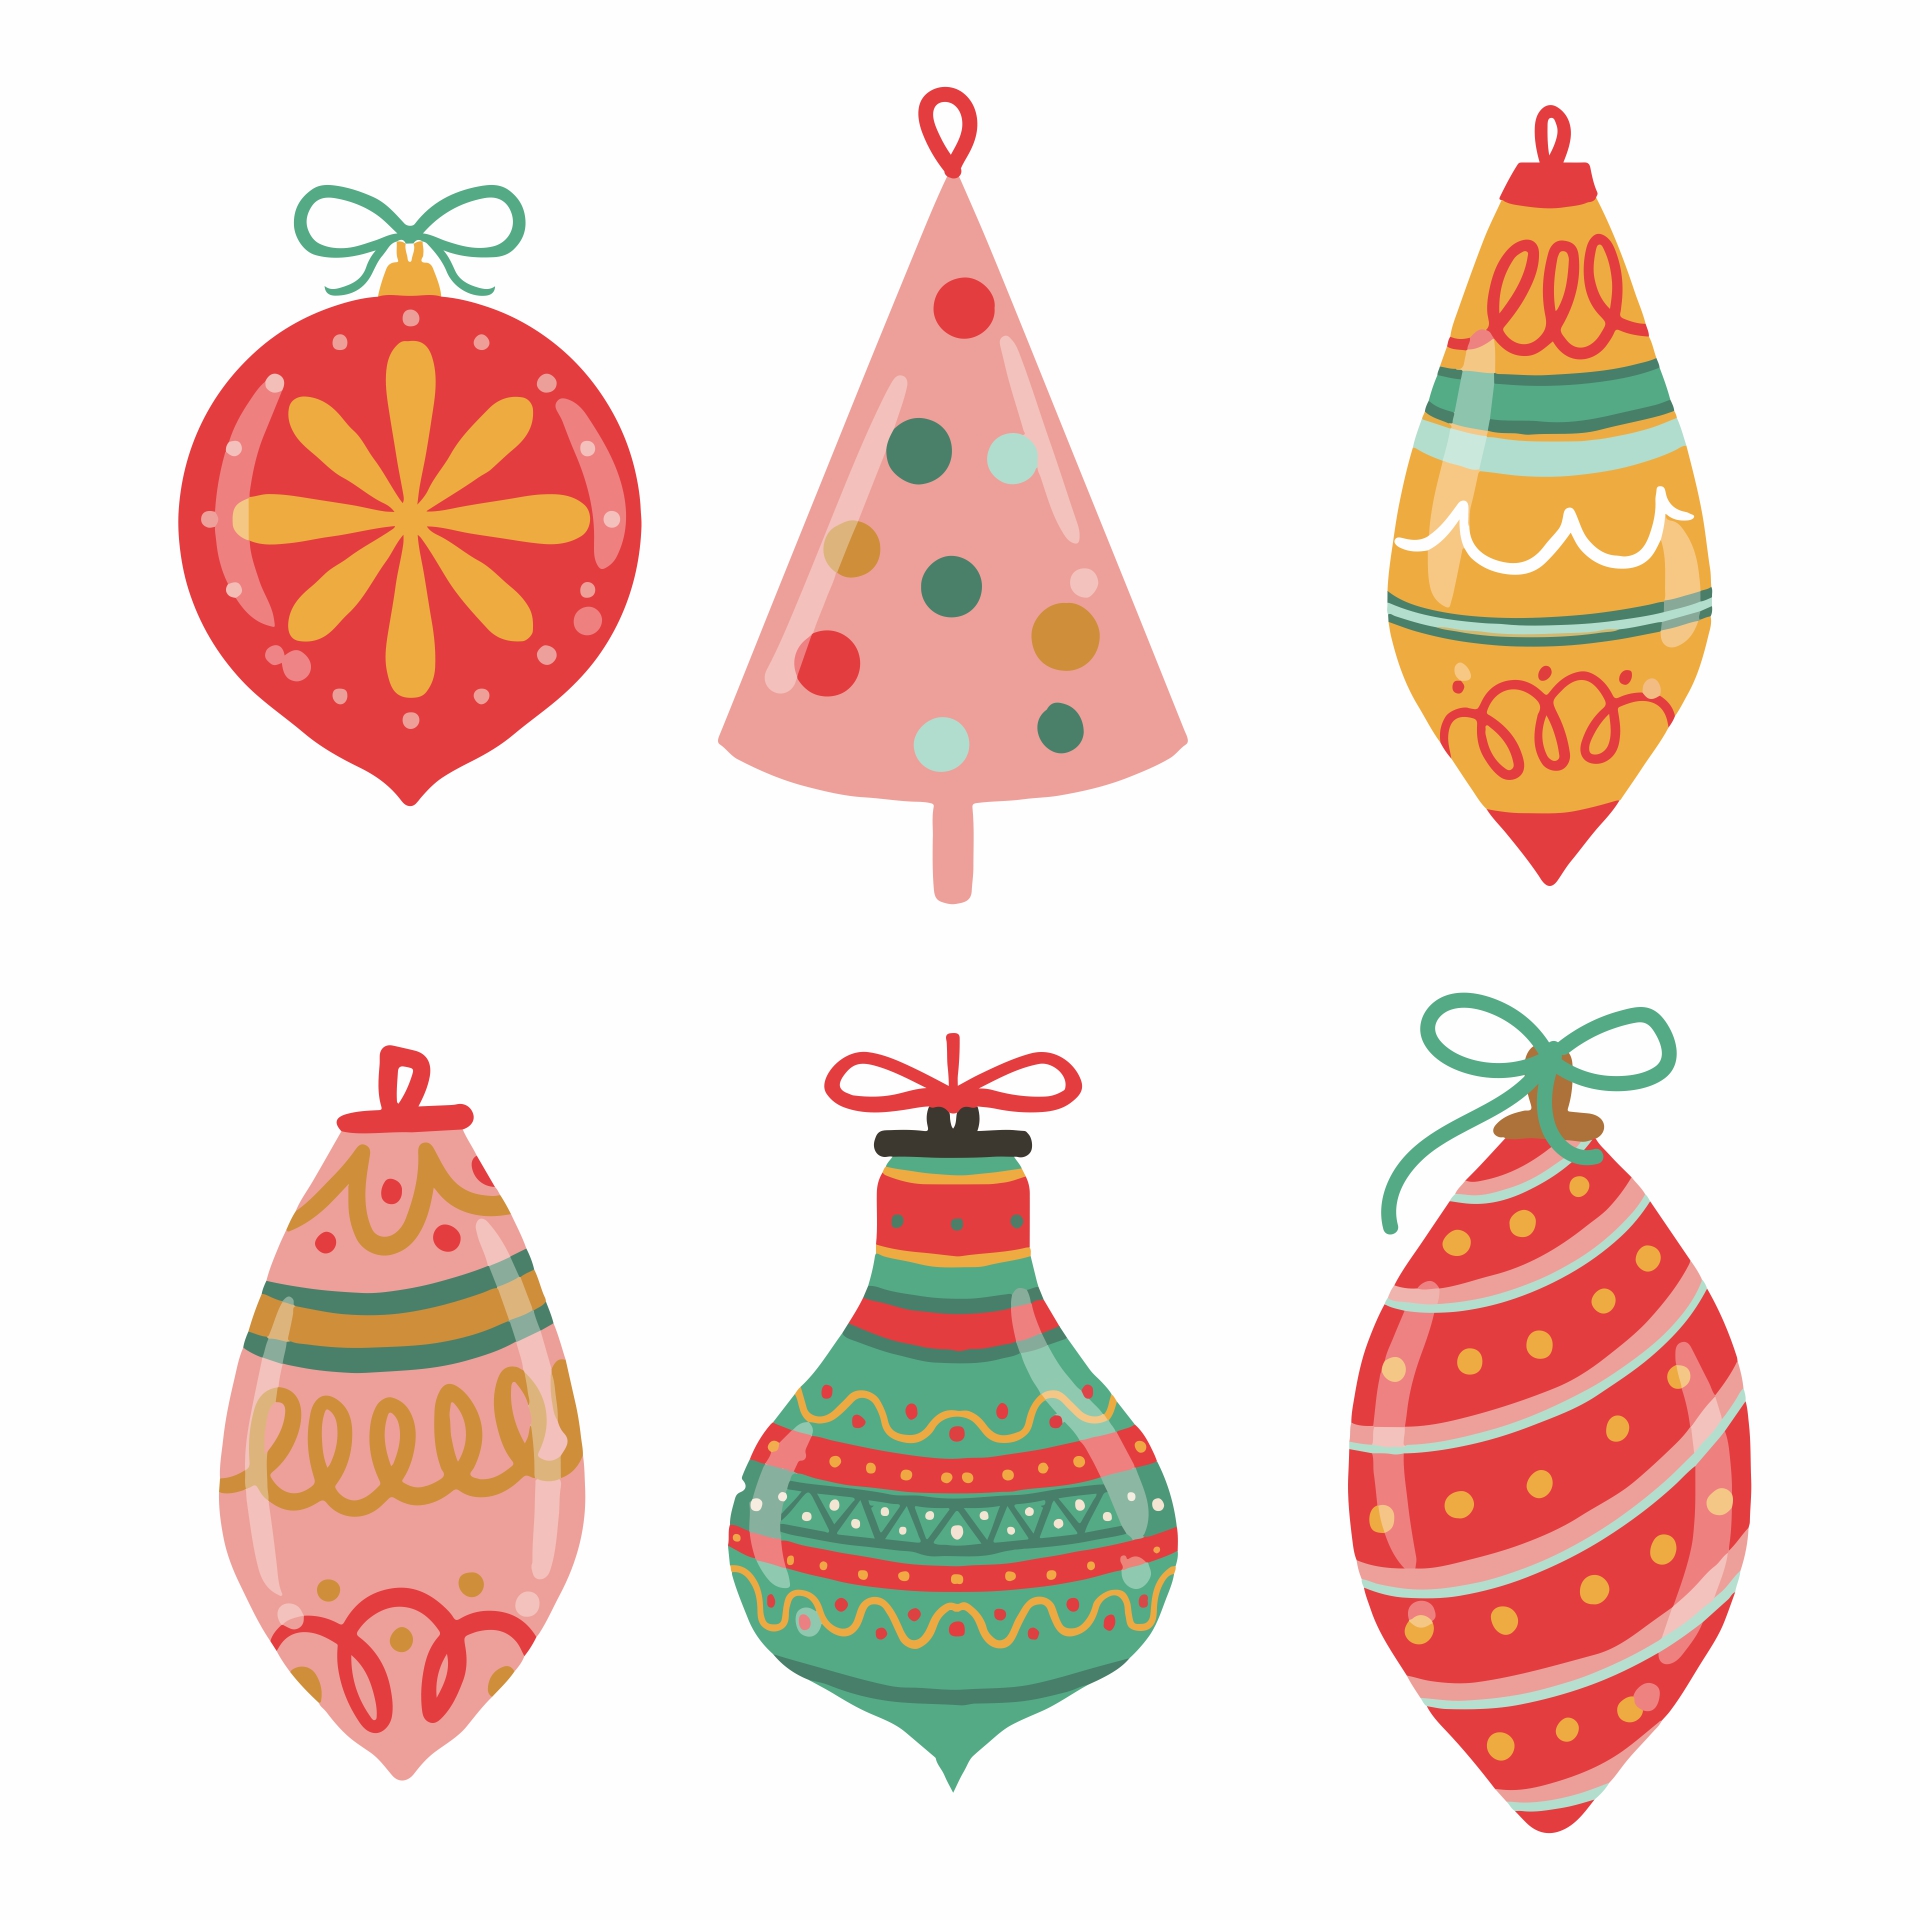 Printable Paper Christmas Ornaments